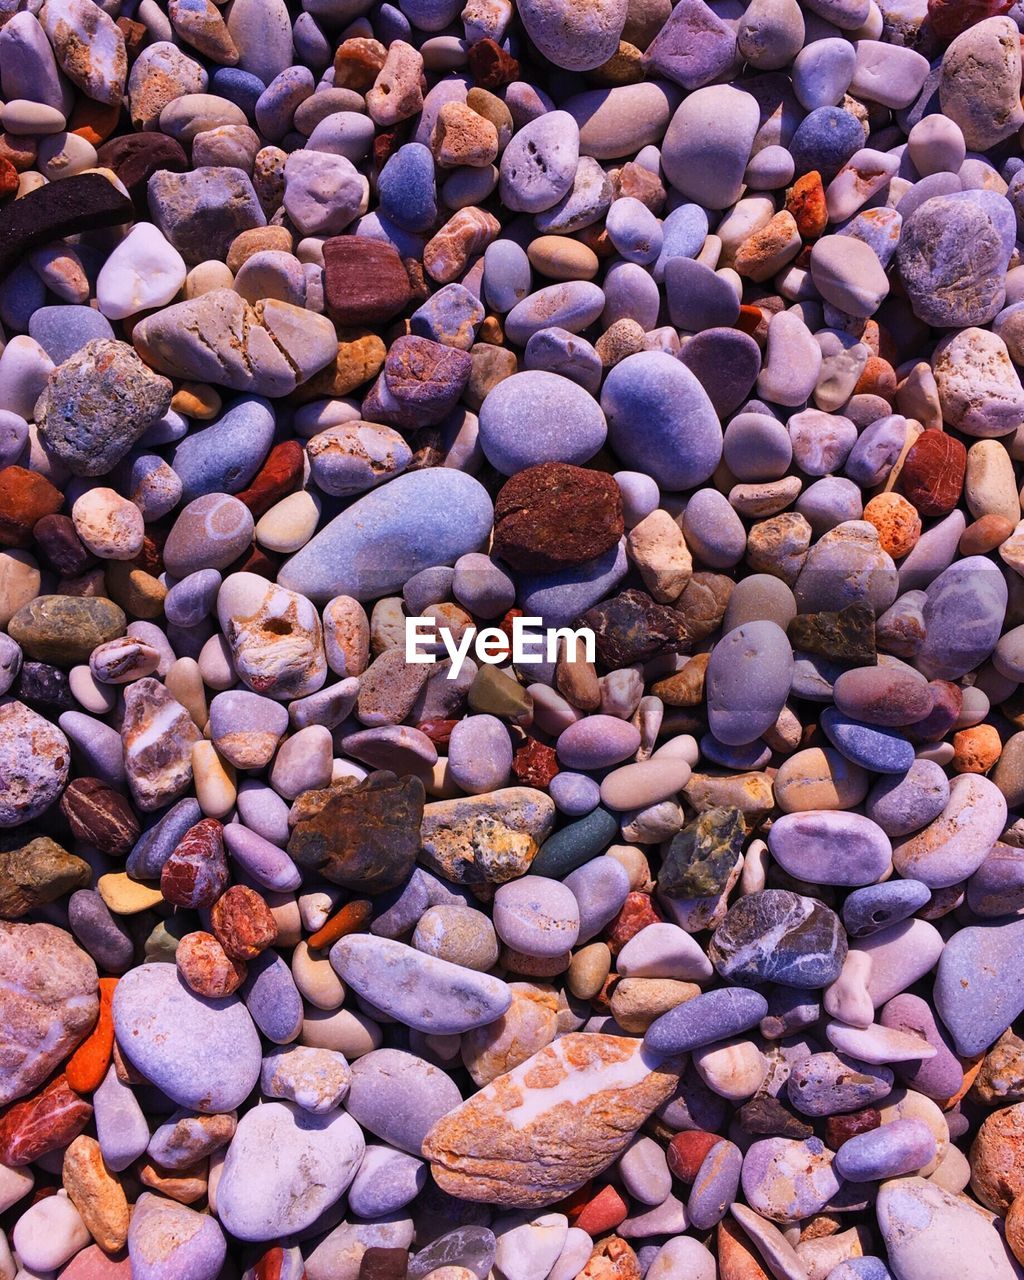 Detail shot of pebbles